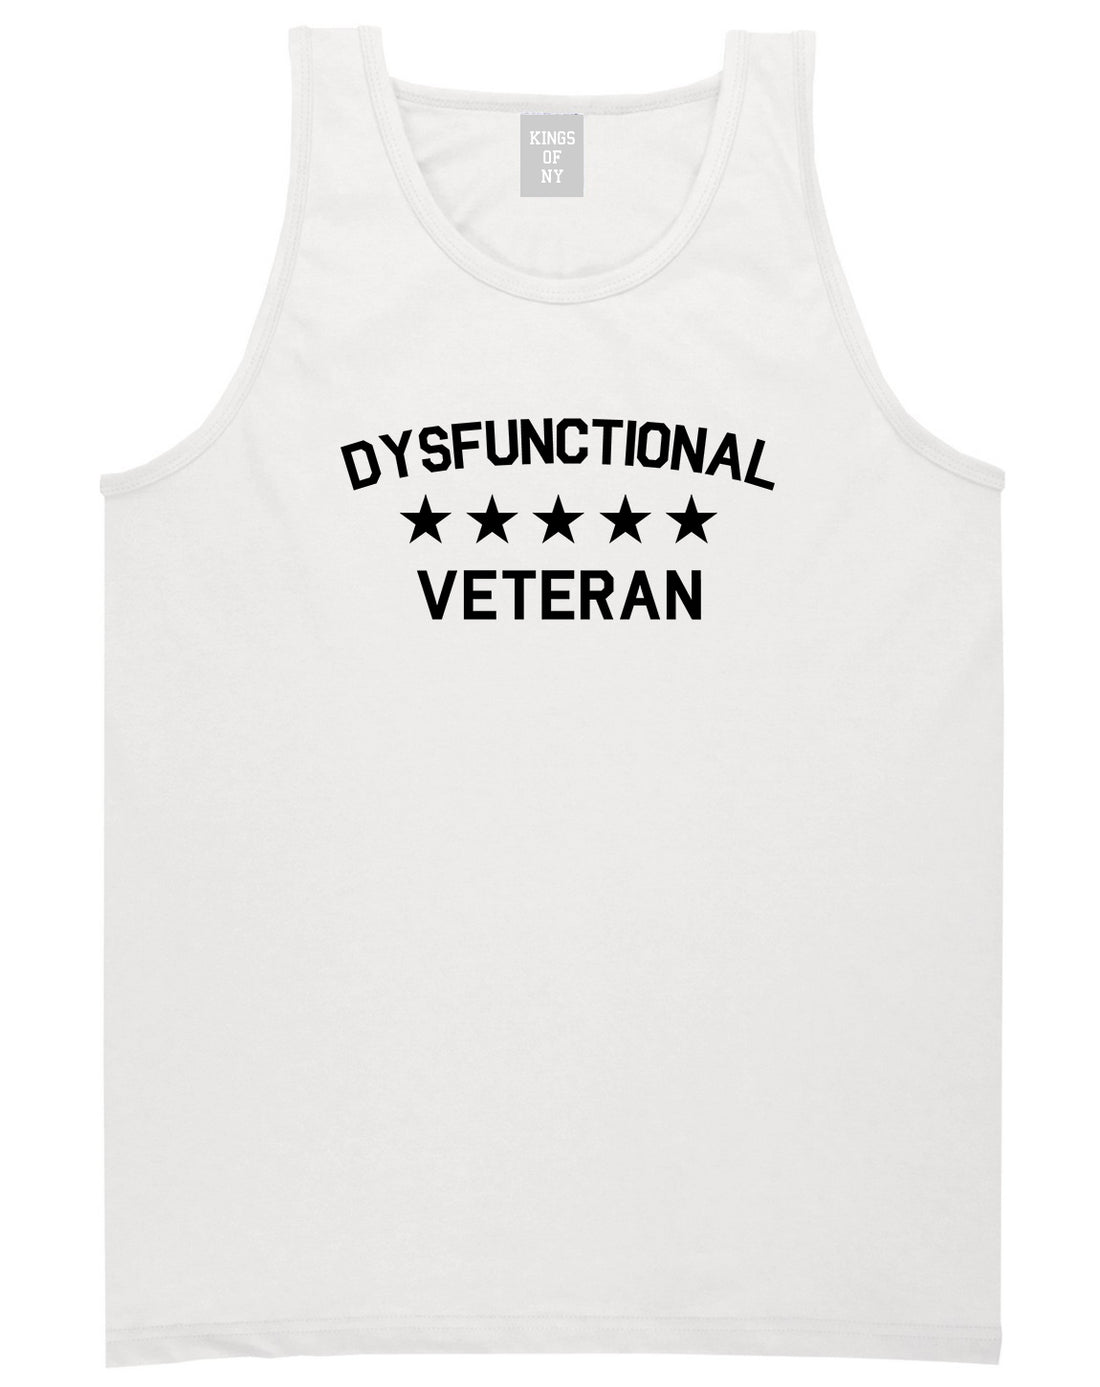 Dysfunctional Veteran Mens Tank Top Shirt White